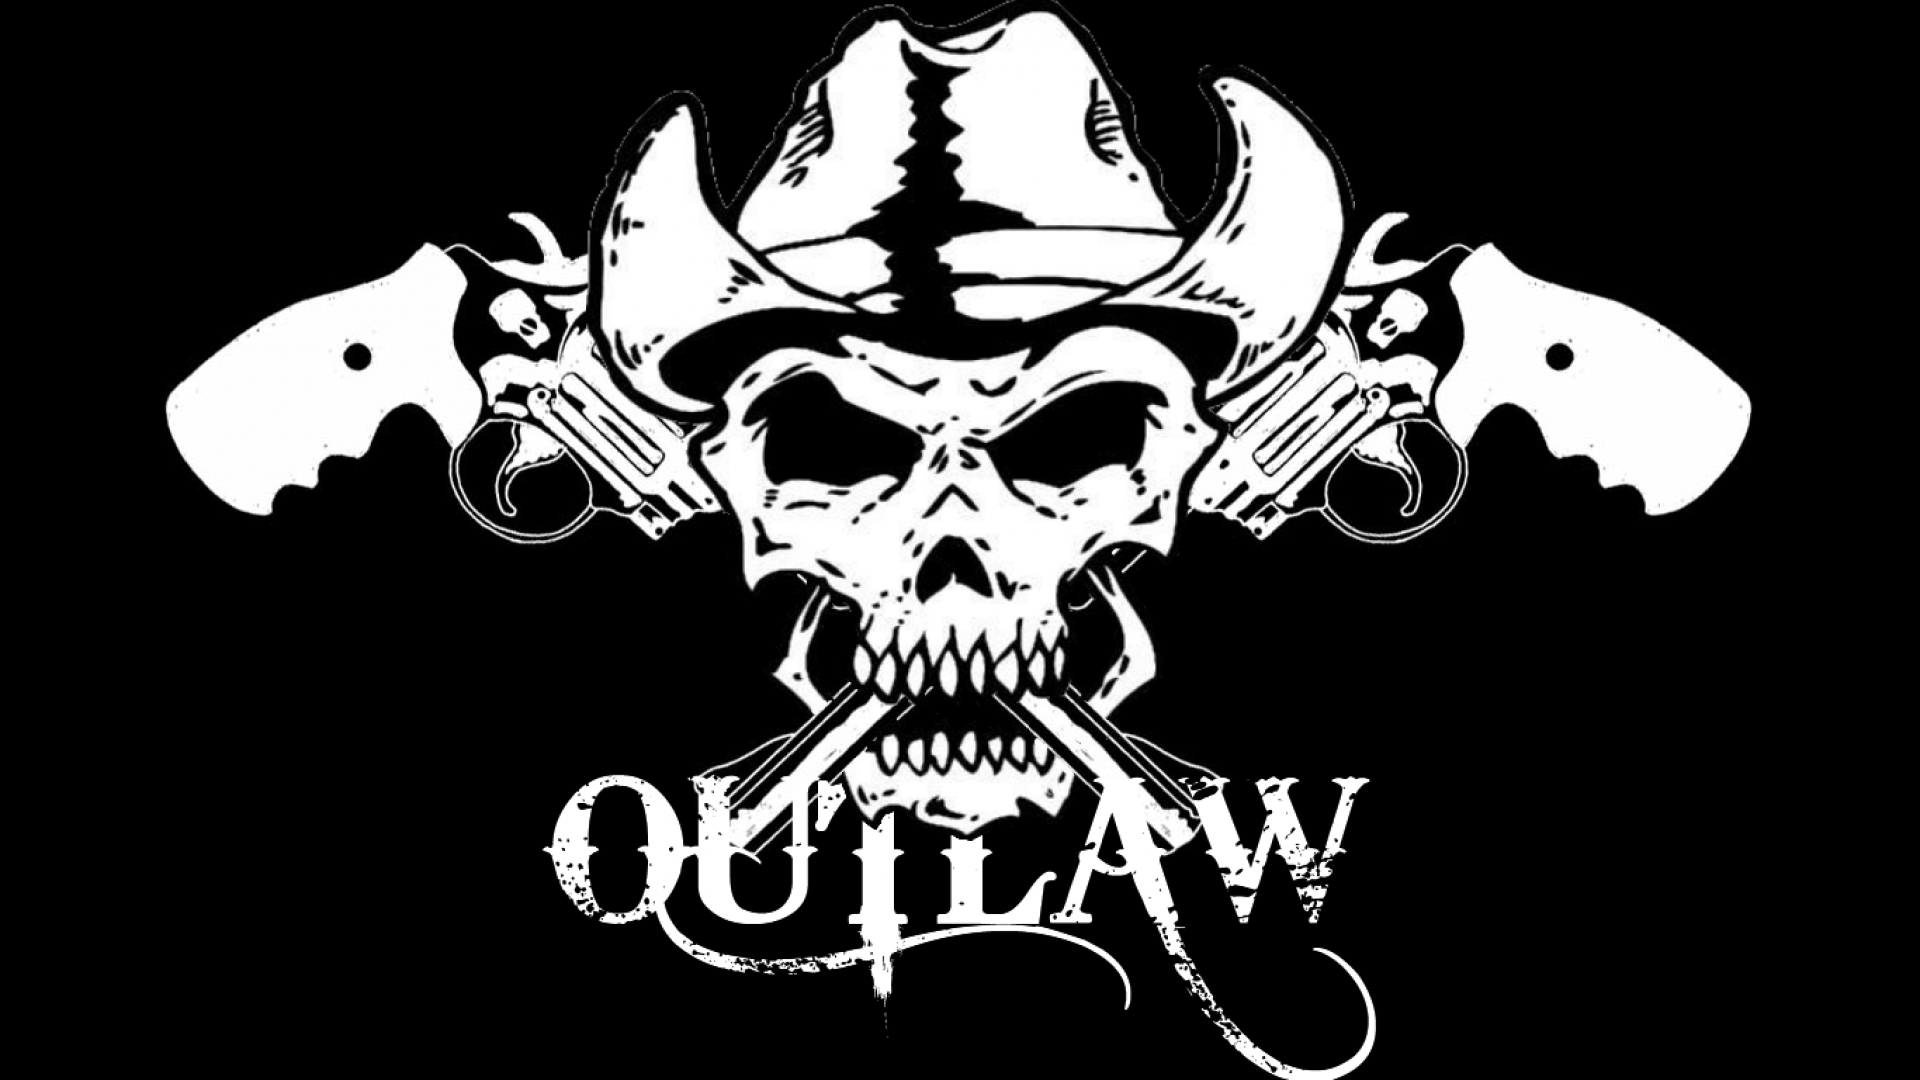 Outlaw Biker Wallpaper (61+ images)